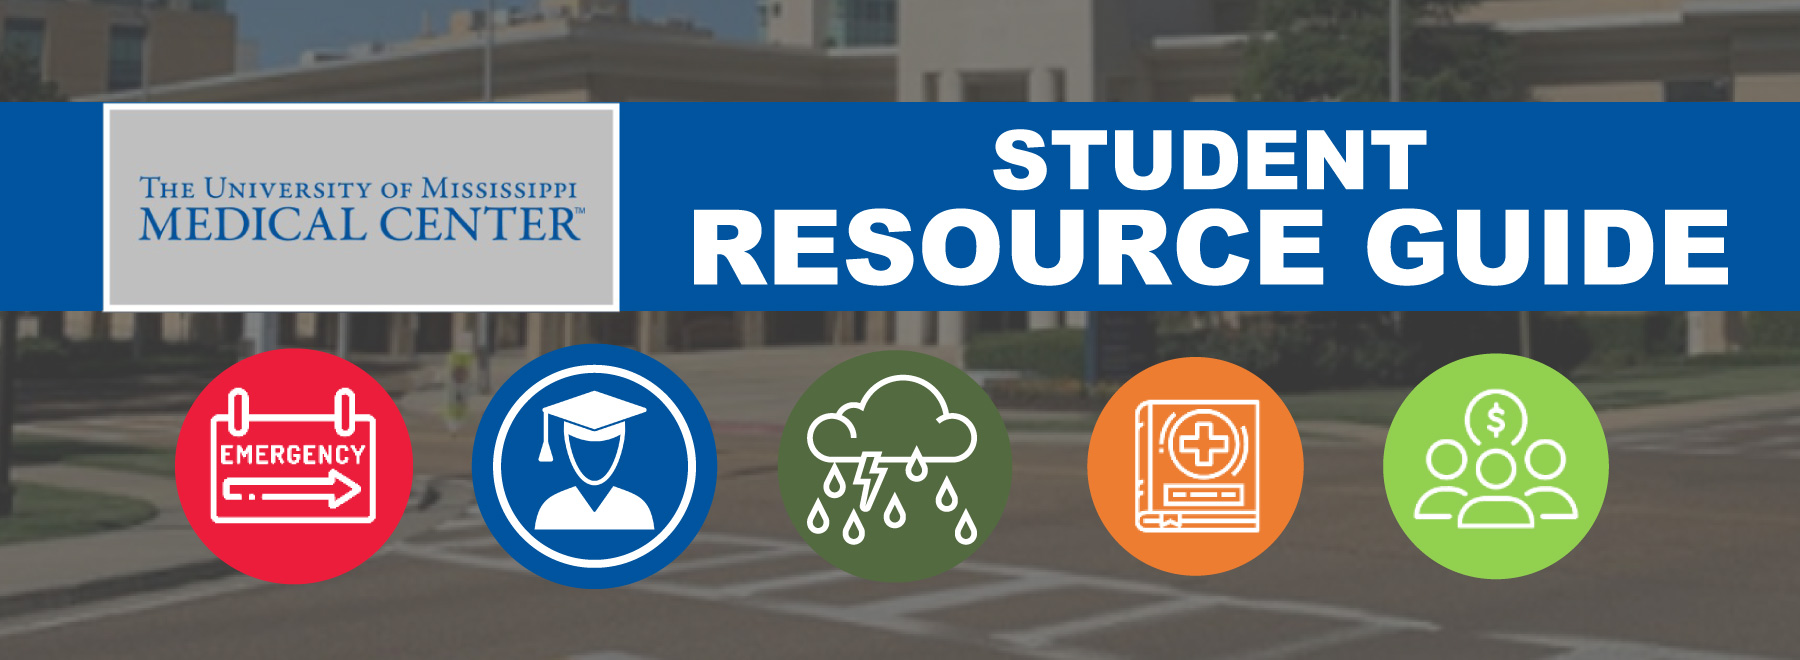 University of Mississippi Medical Center Student Resource Guide